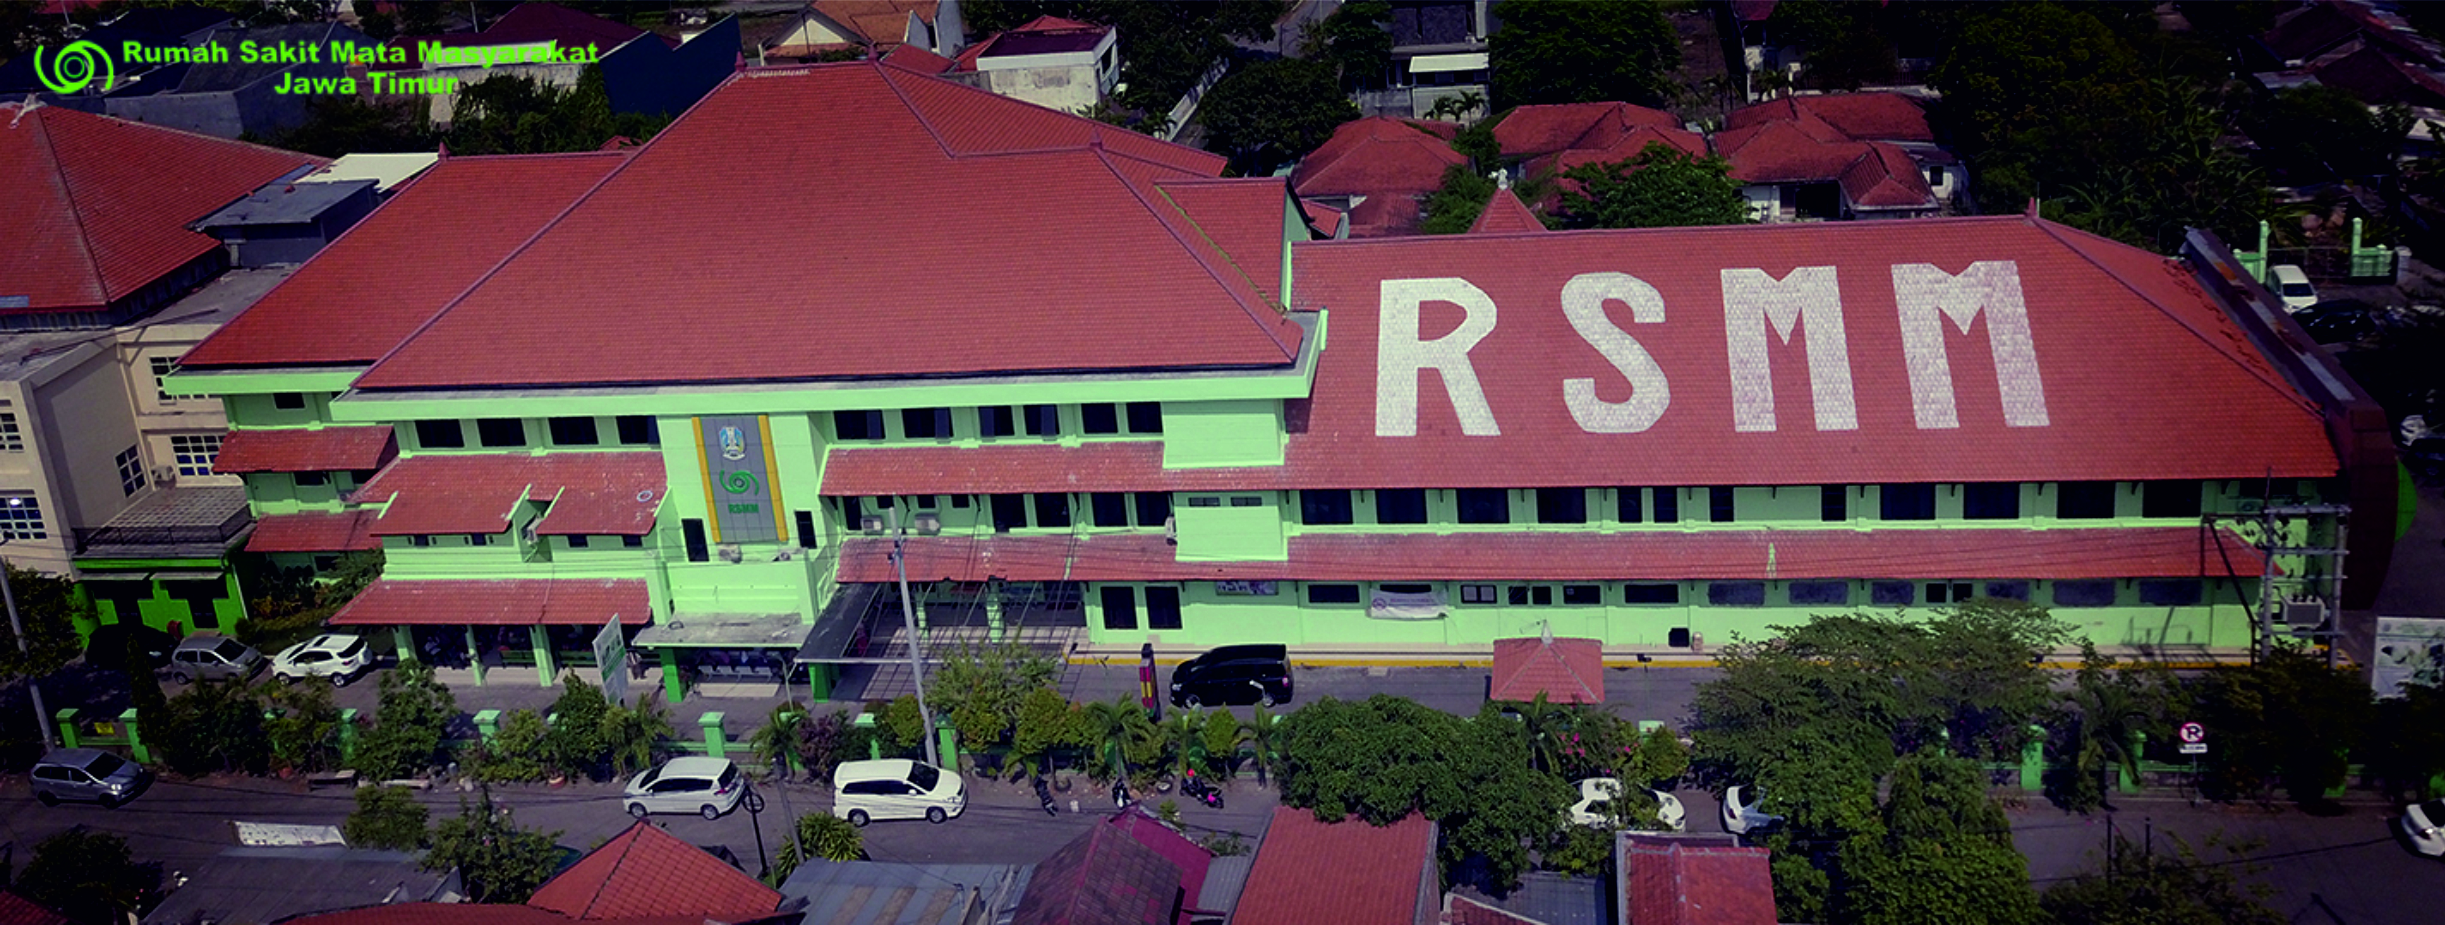 Rumah Sakit Mata Masyarakat Jawa Timur